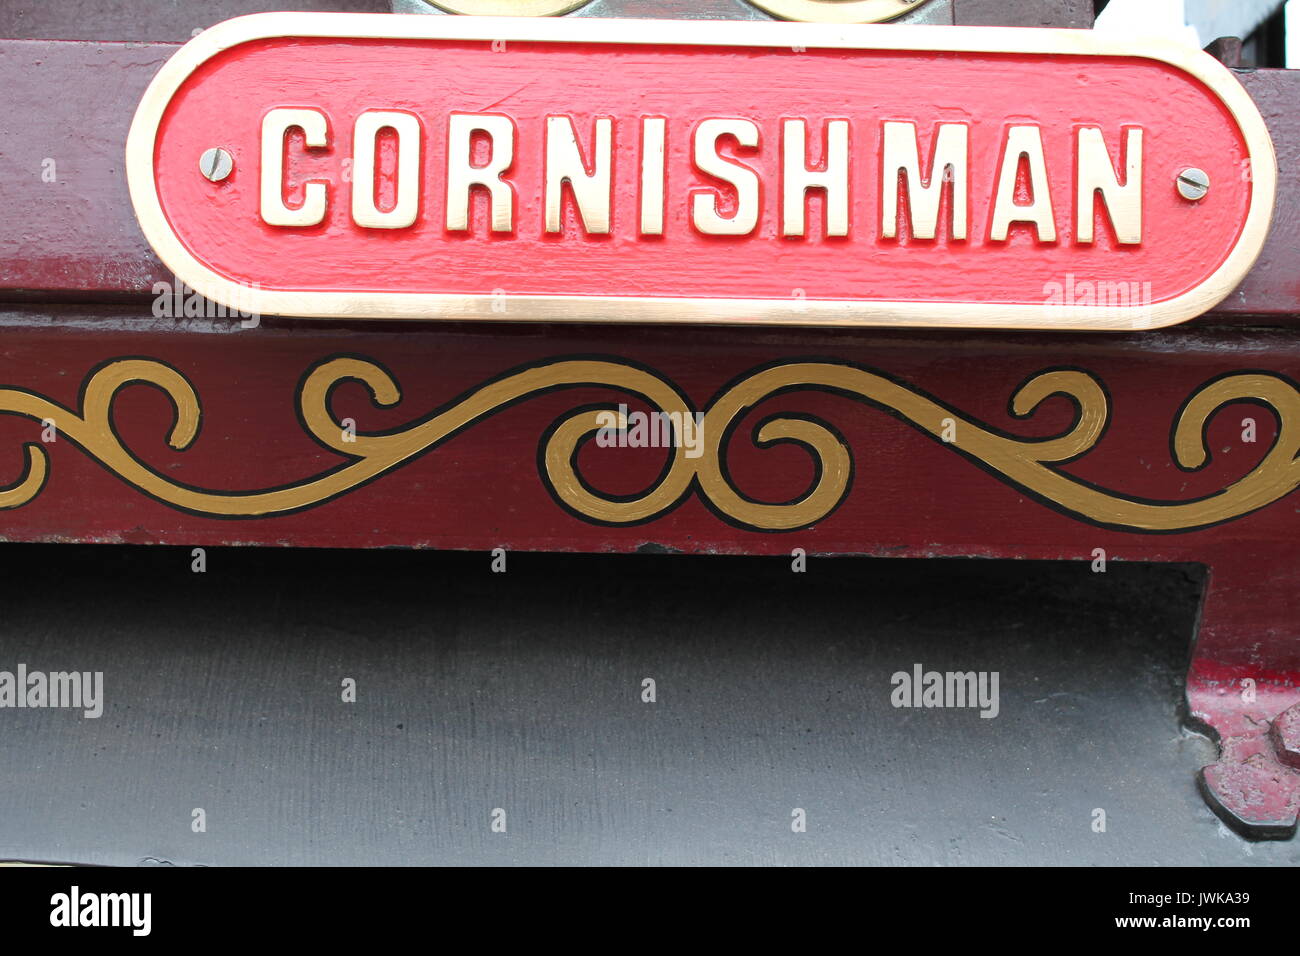 Cornishman steam traction engine name plate. Stock Photo